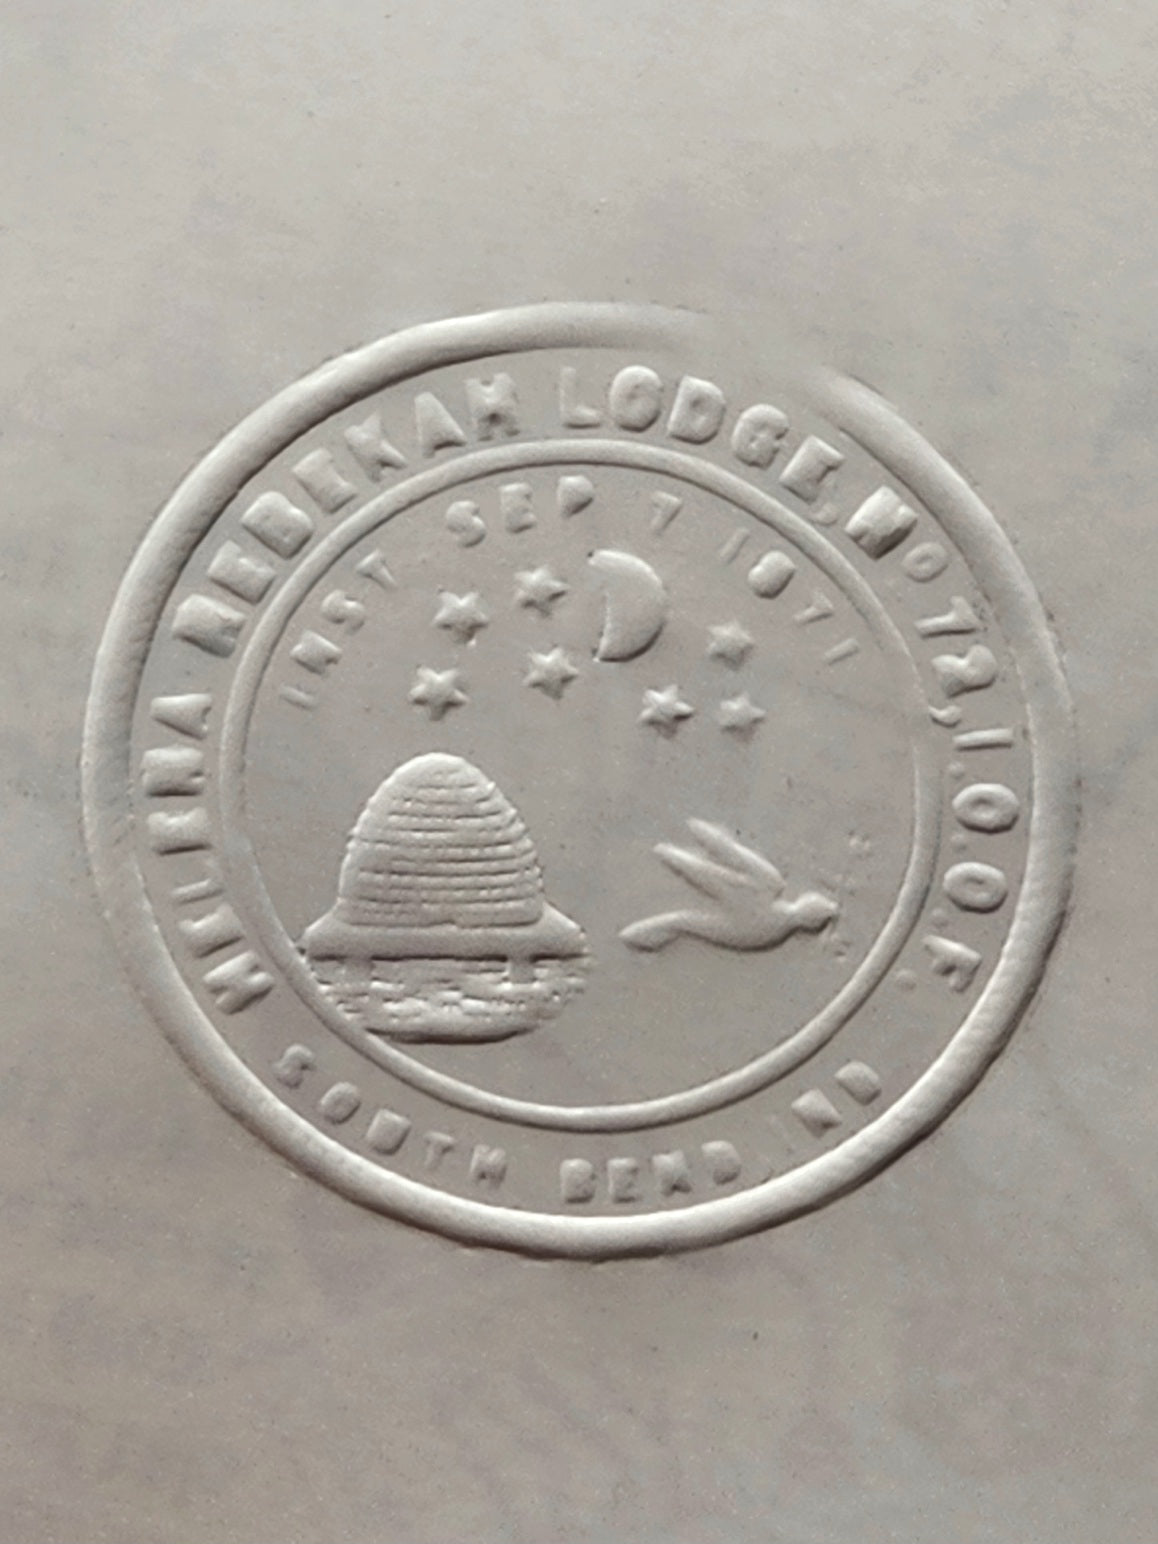 Rebekah Lodge Stamp